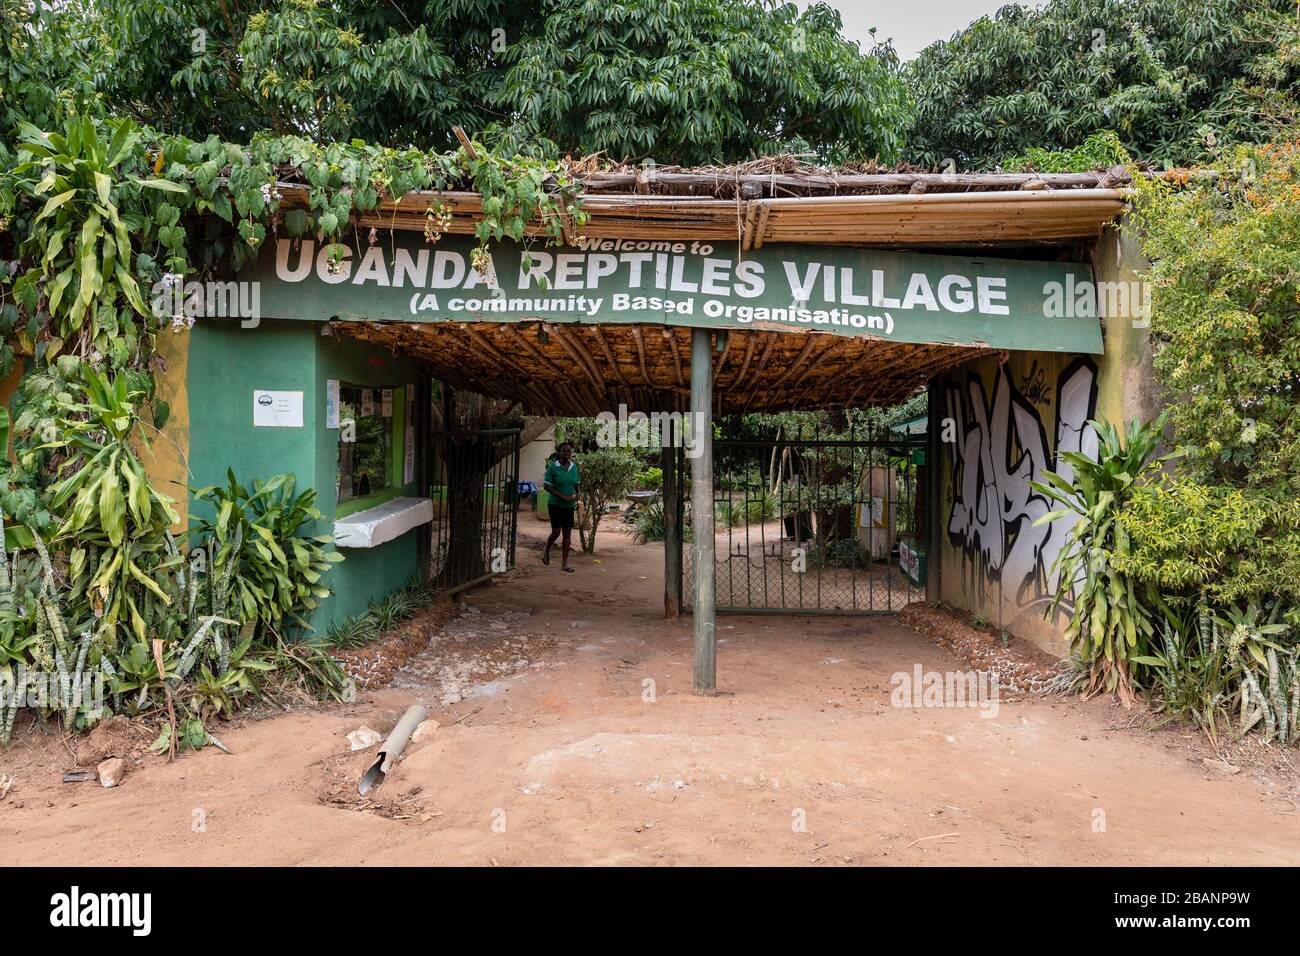 Uganda Reptiles Village, Entebbe, Uganda Stock Photo